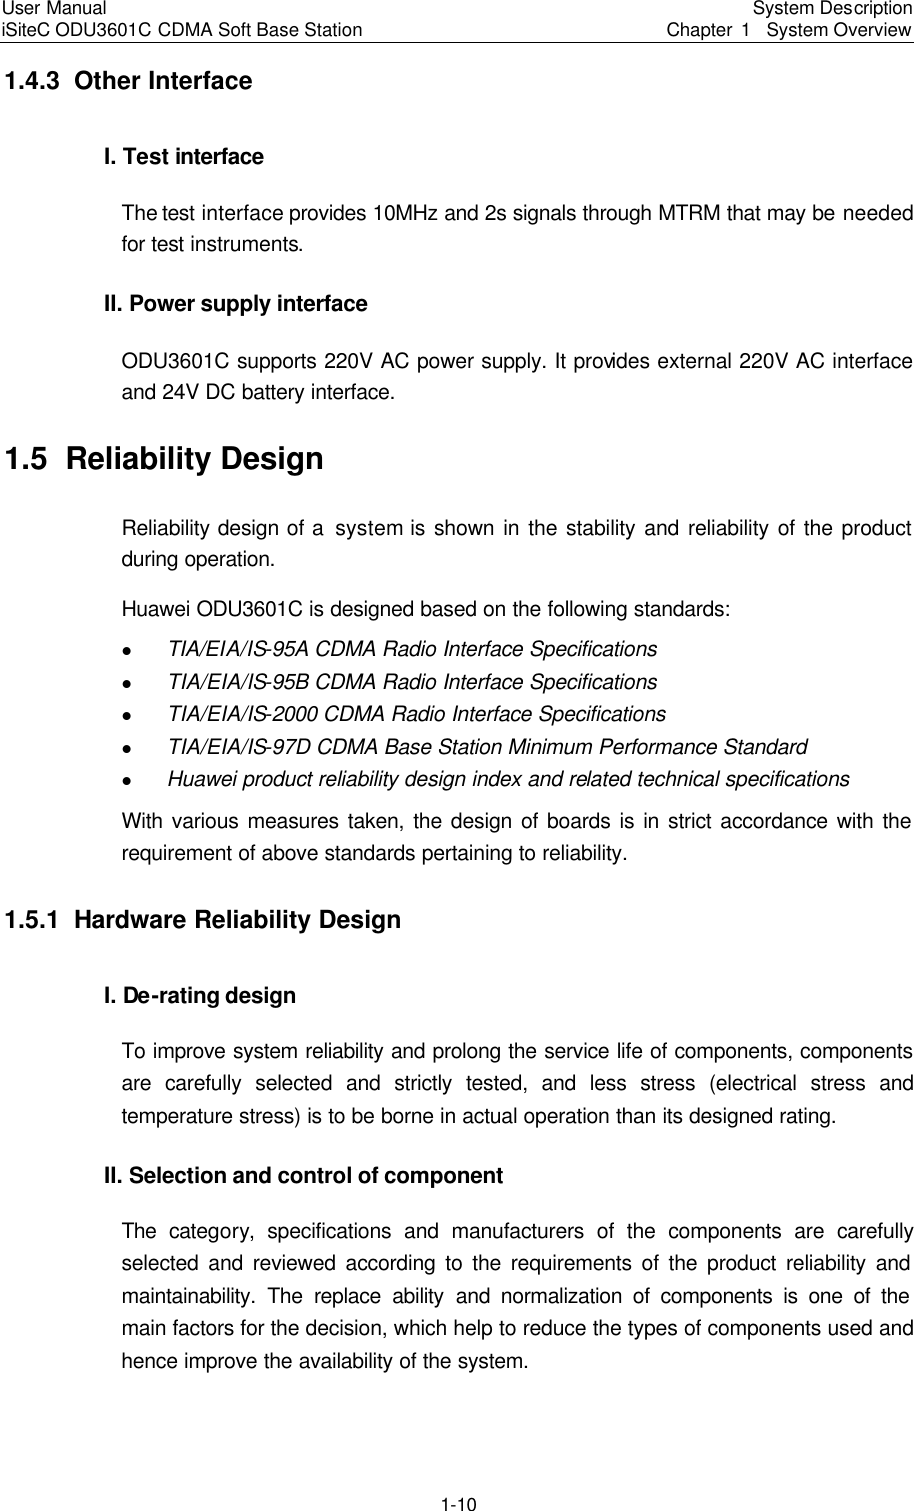 Page 13 of Huawei Technologies ODU3601C-800 CDMA Base Station User Manual 2